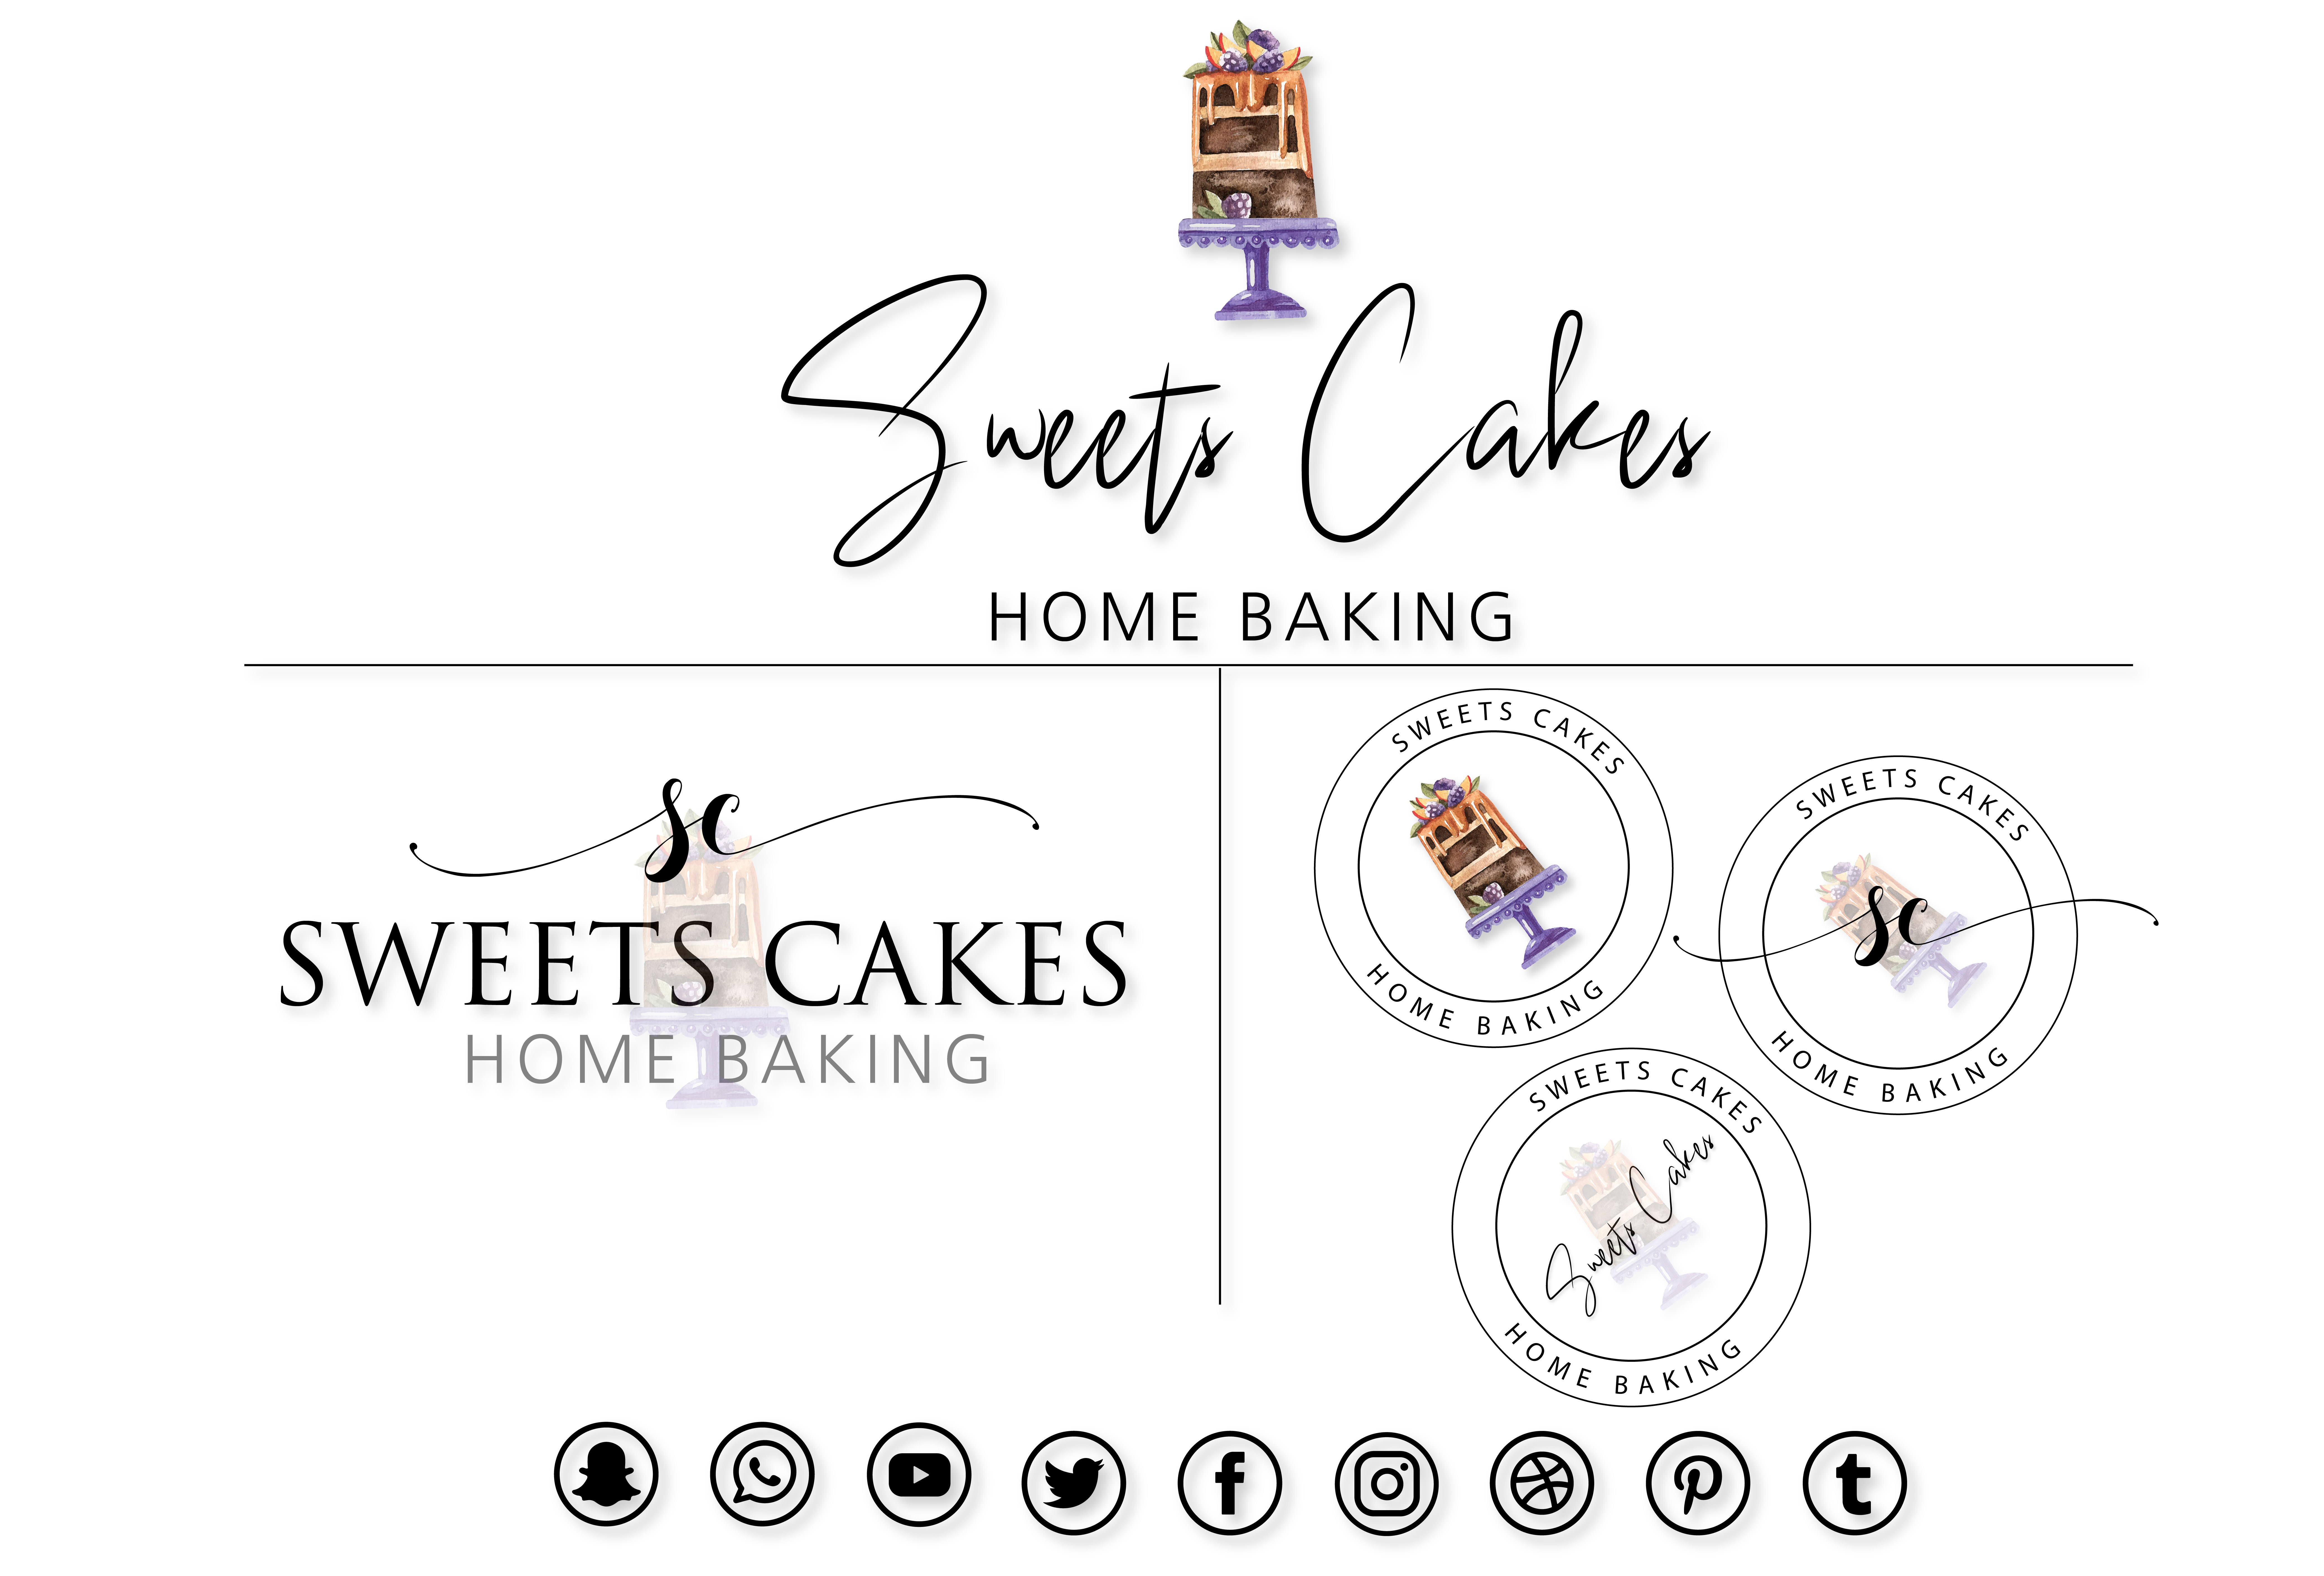 Caroline's Cakes 7-Layer Caramel Cake | Shop Mail Order Cakes